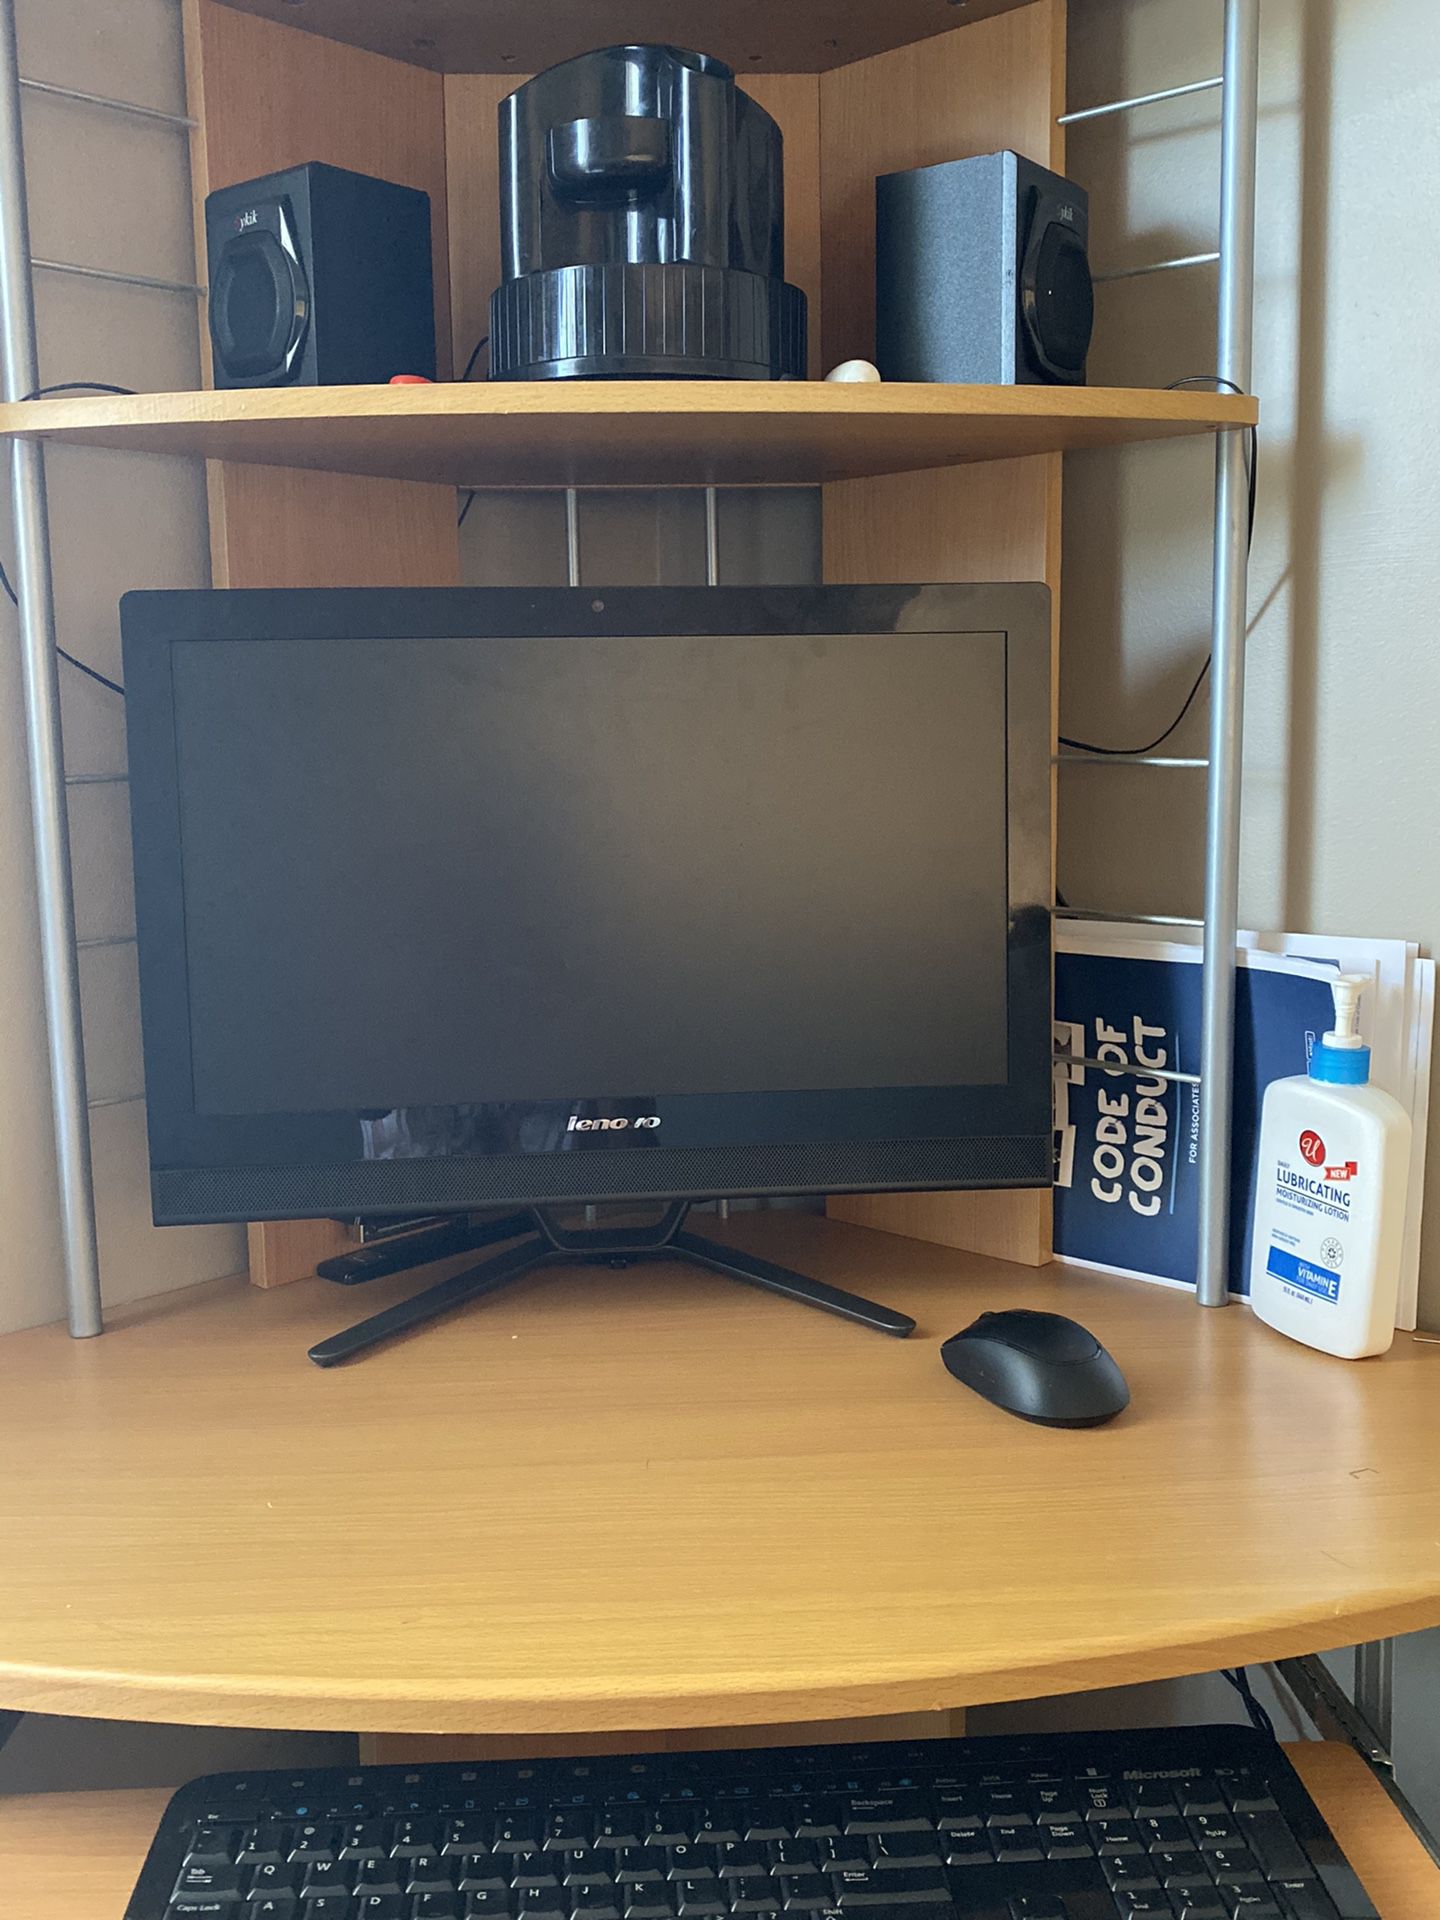 Desktops computer with cabinet